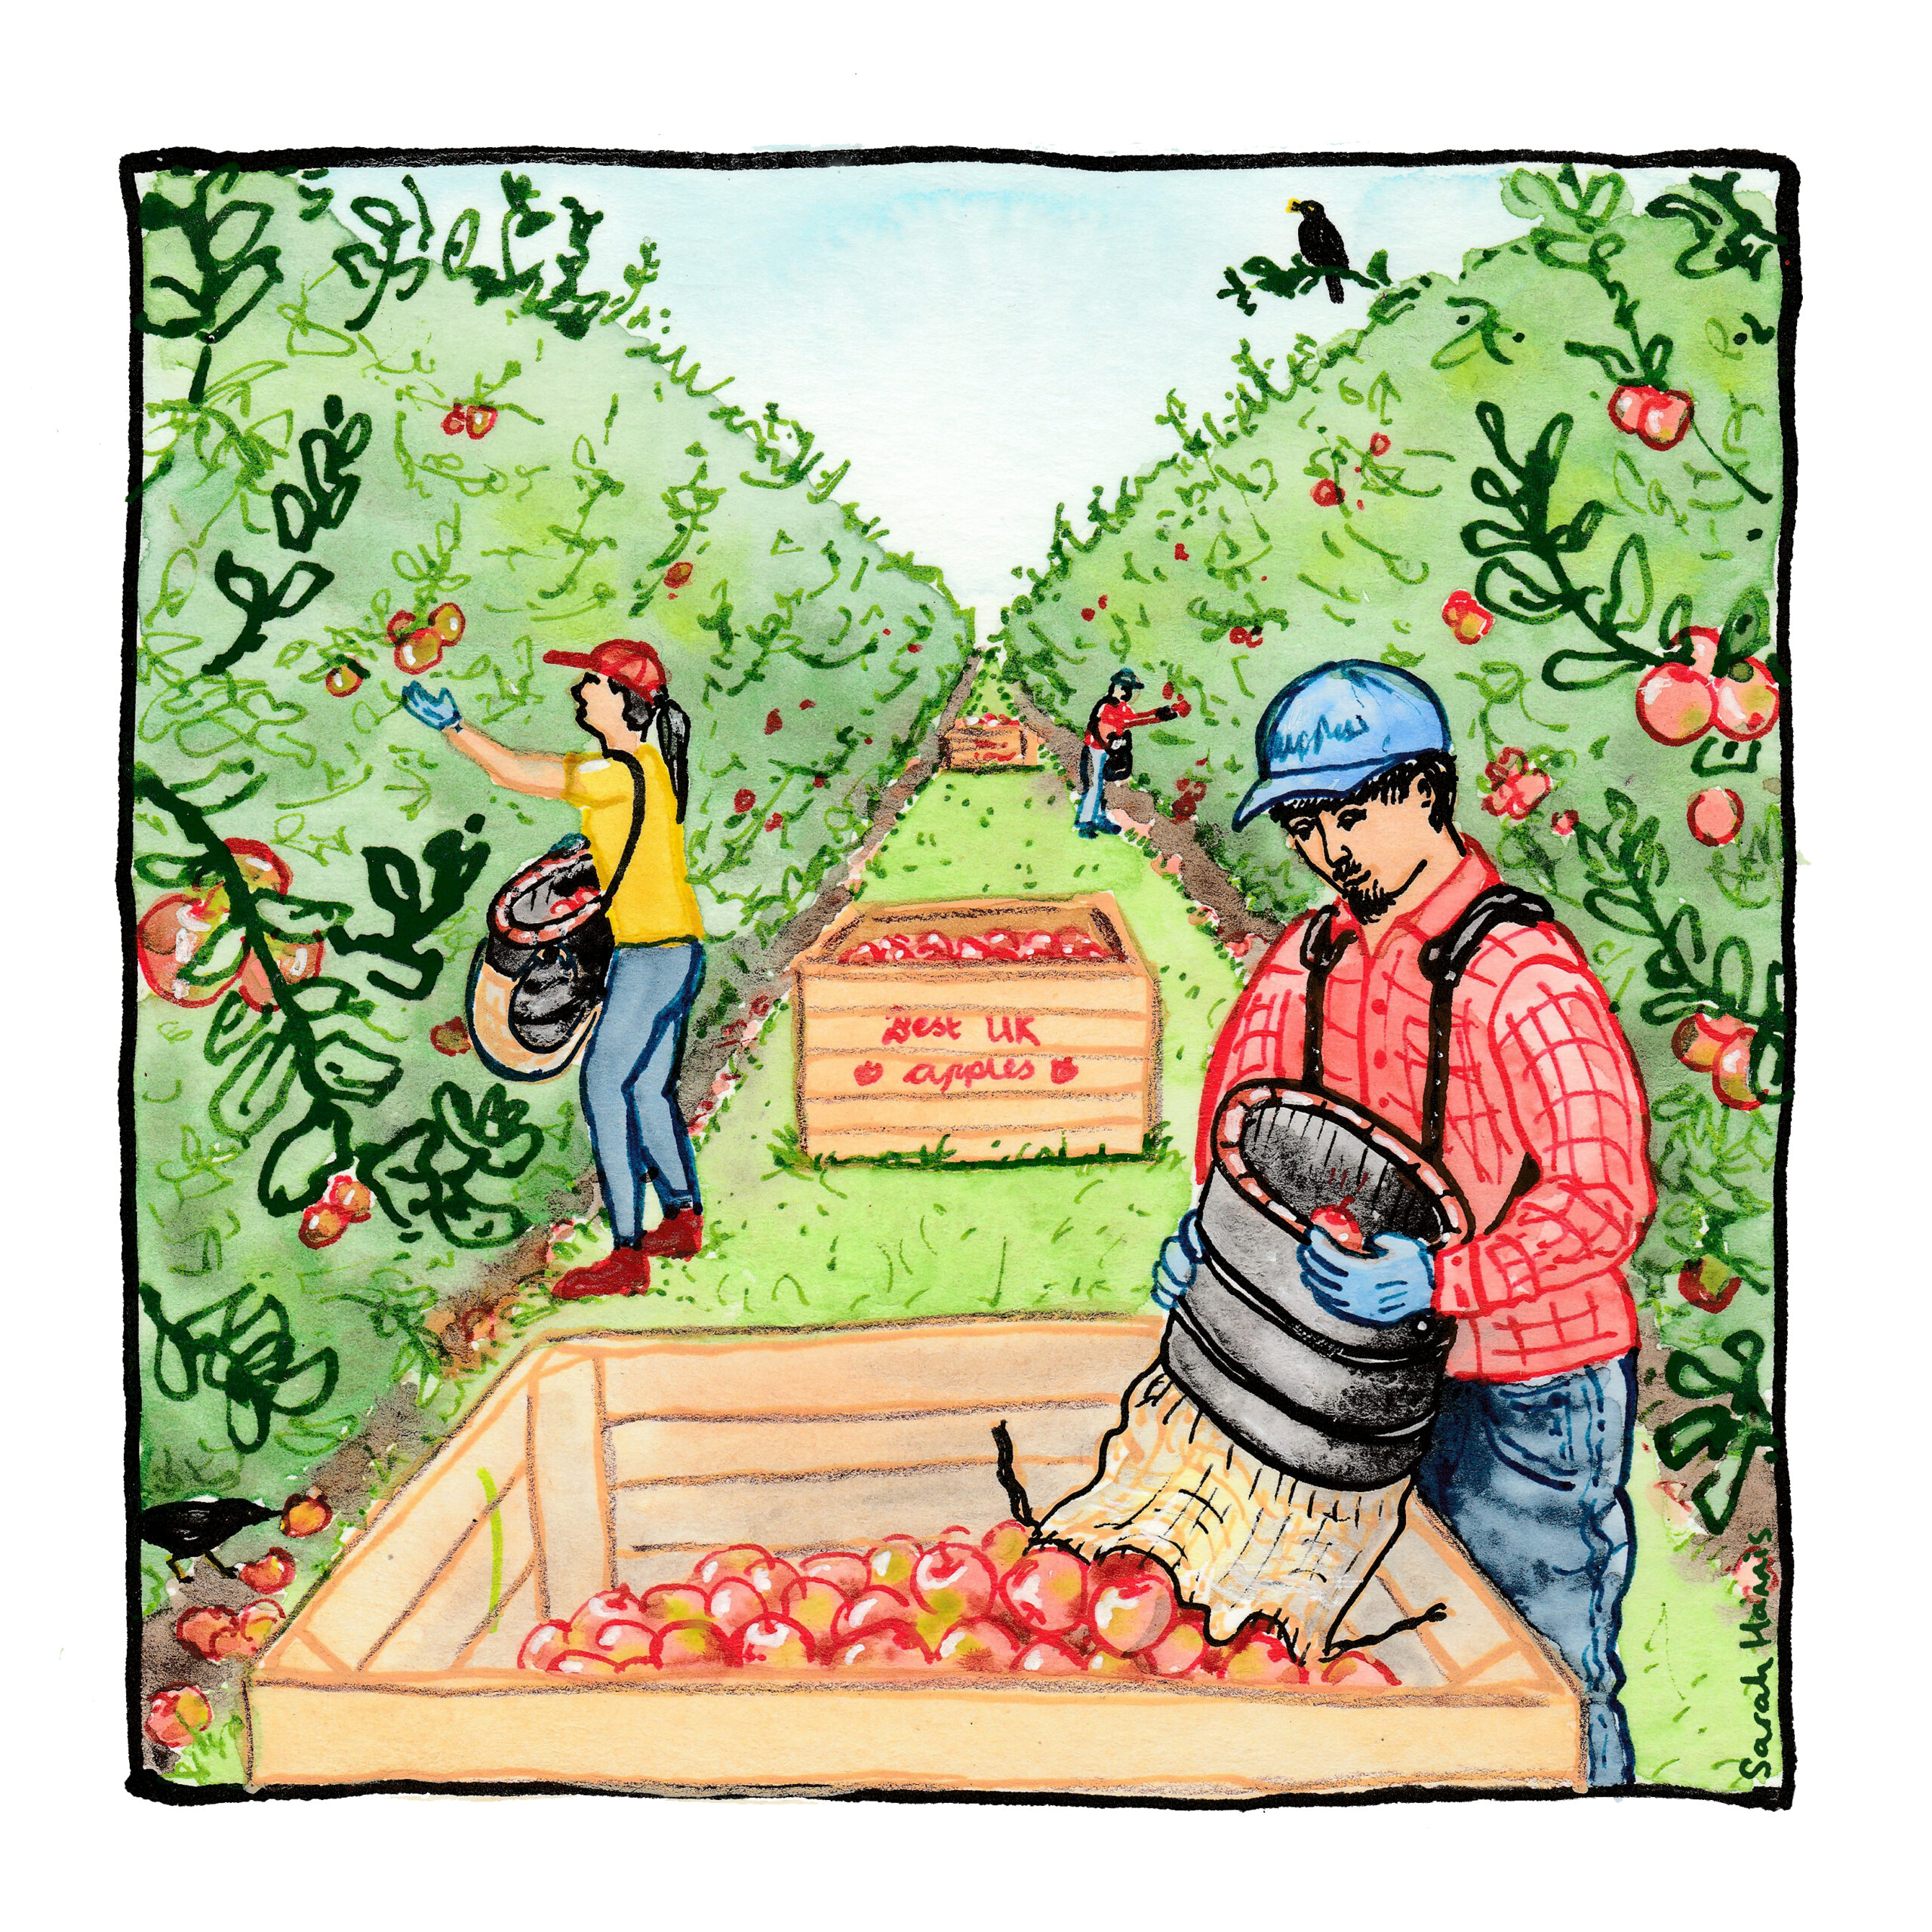 Getting around: Picking Apples